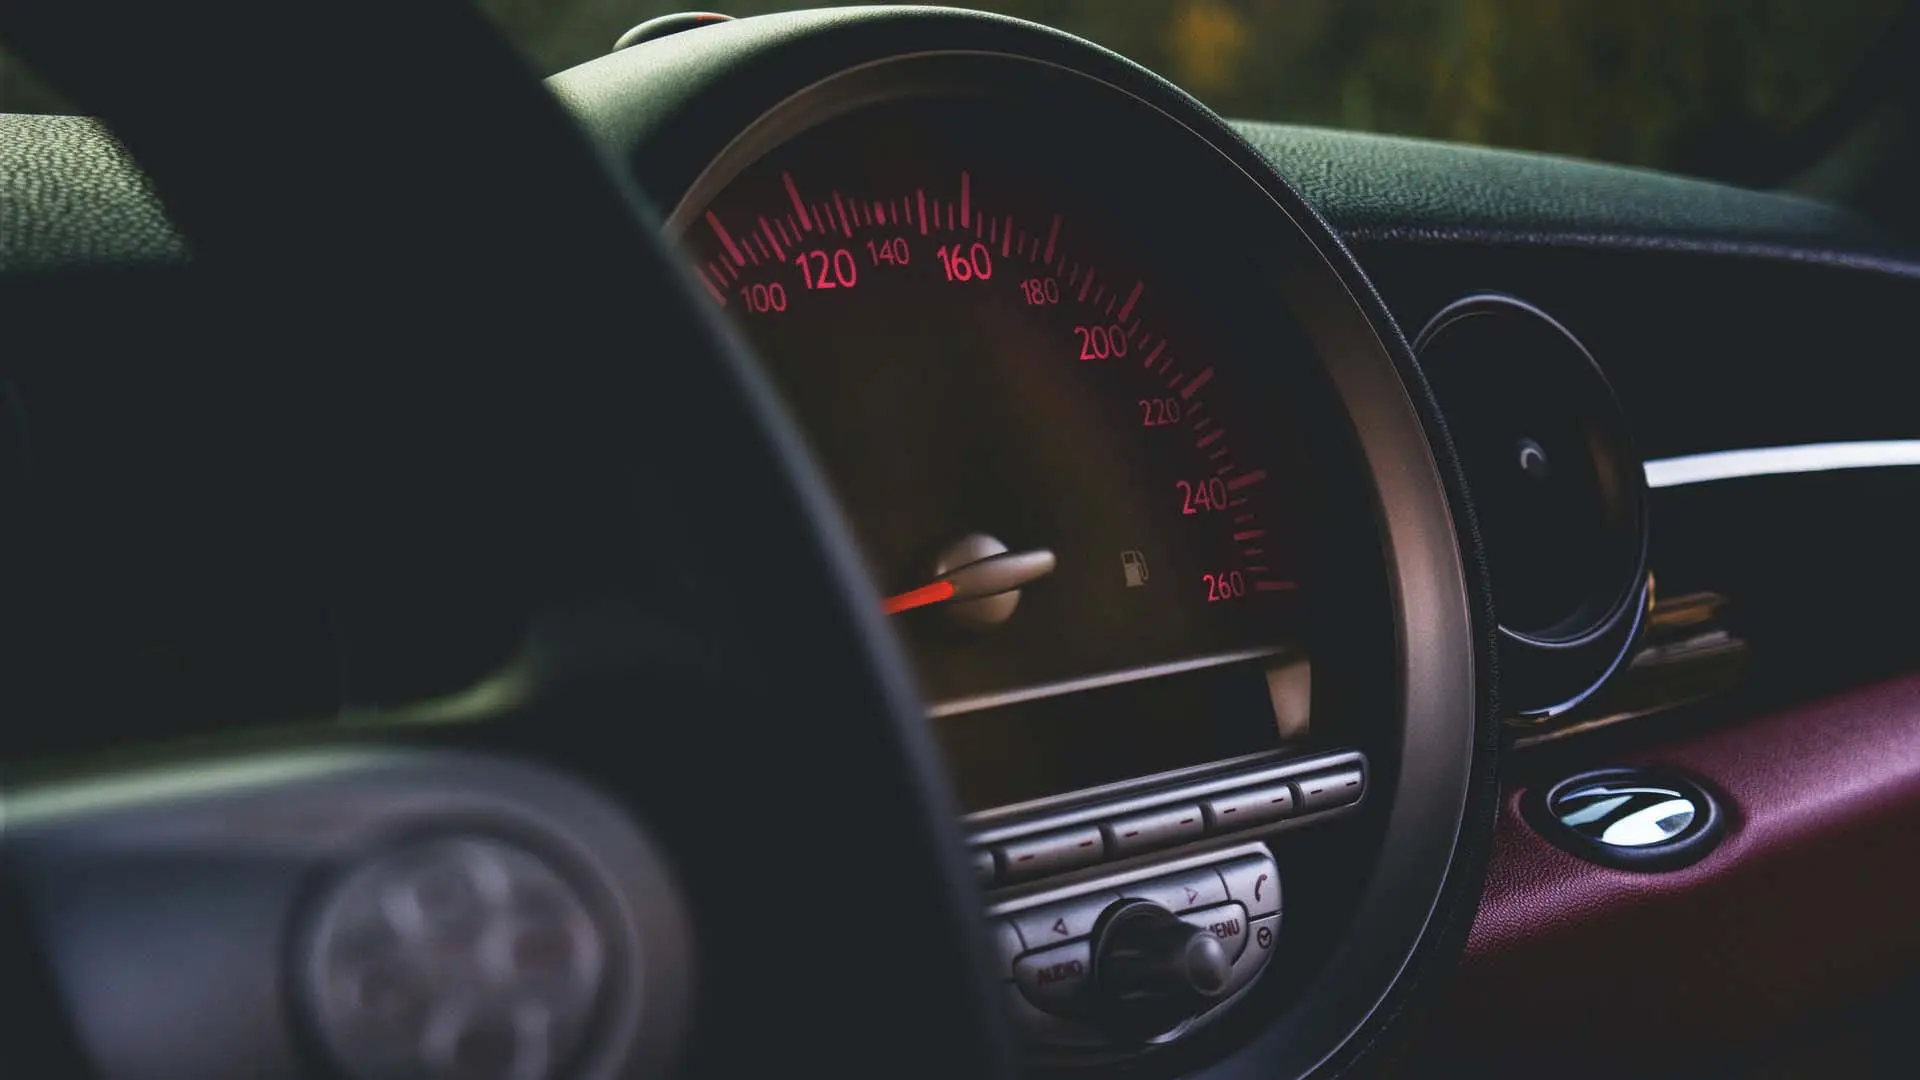 Large speedometer on black dashboard